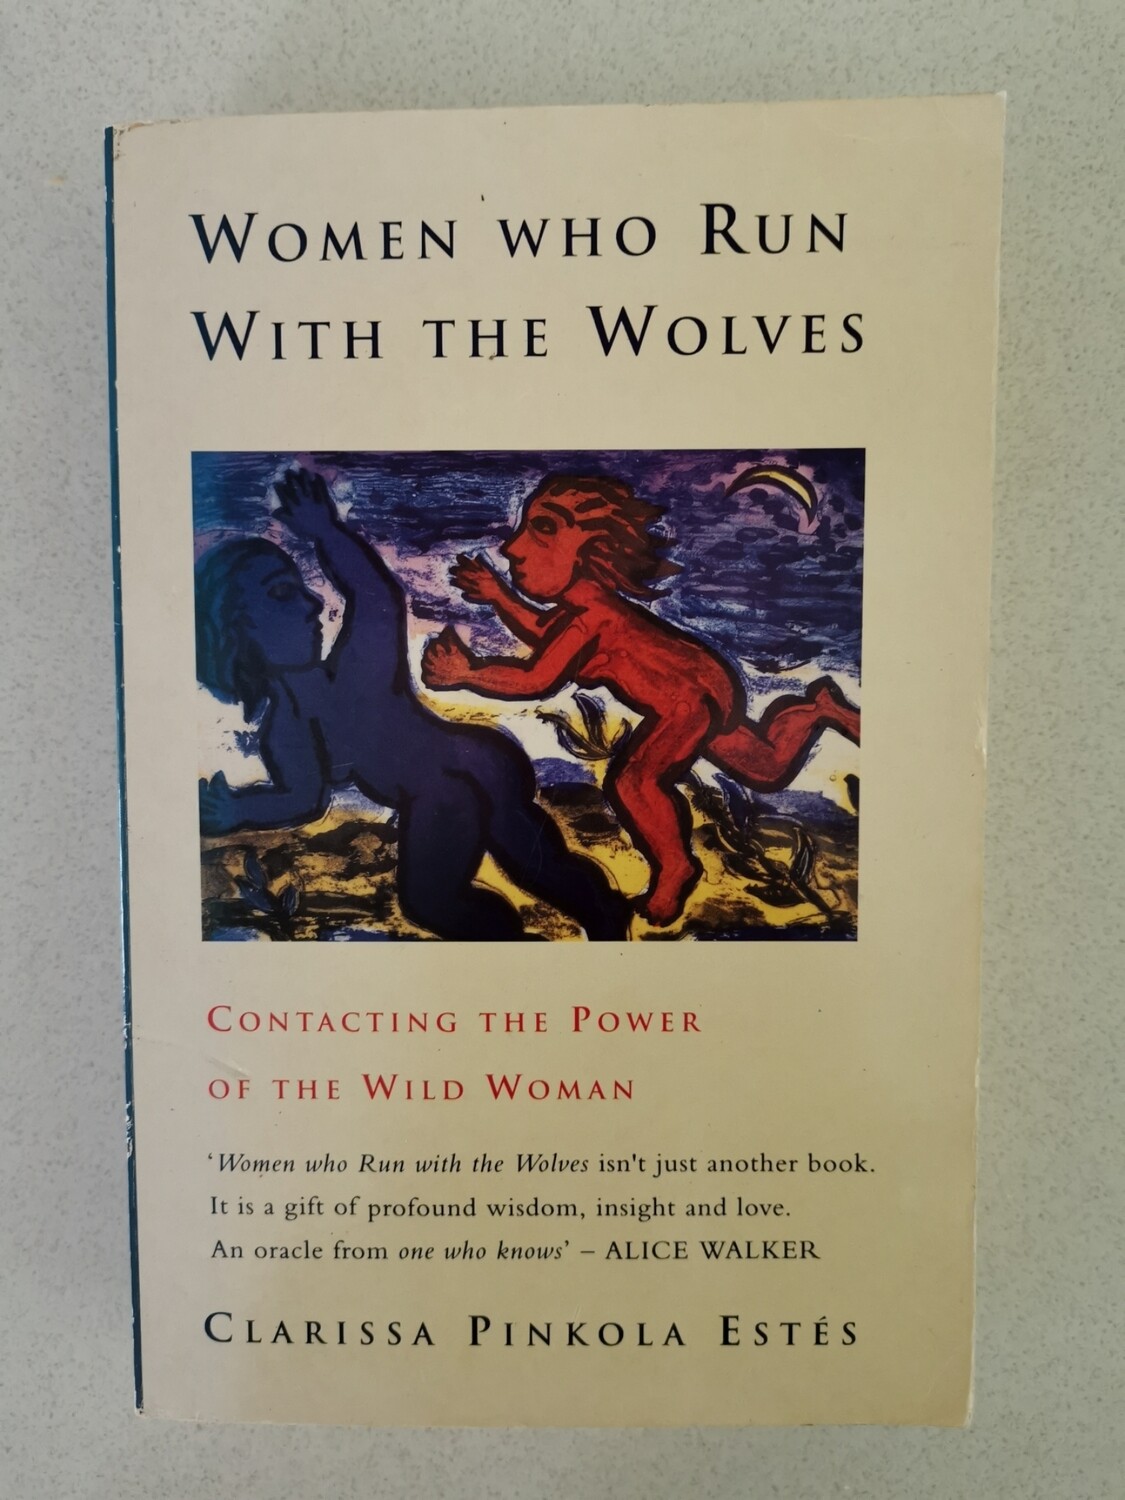 Women who run with wolves, Clarissa Pinkola, Estes